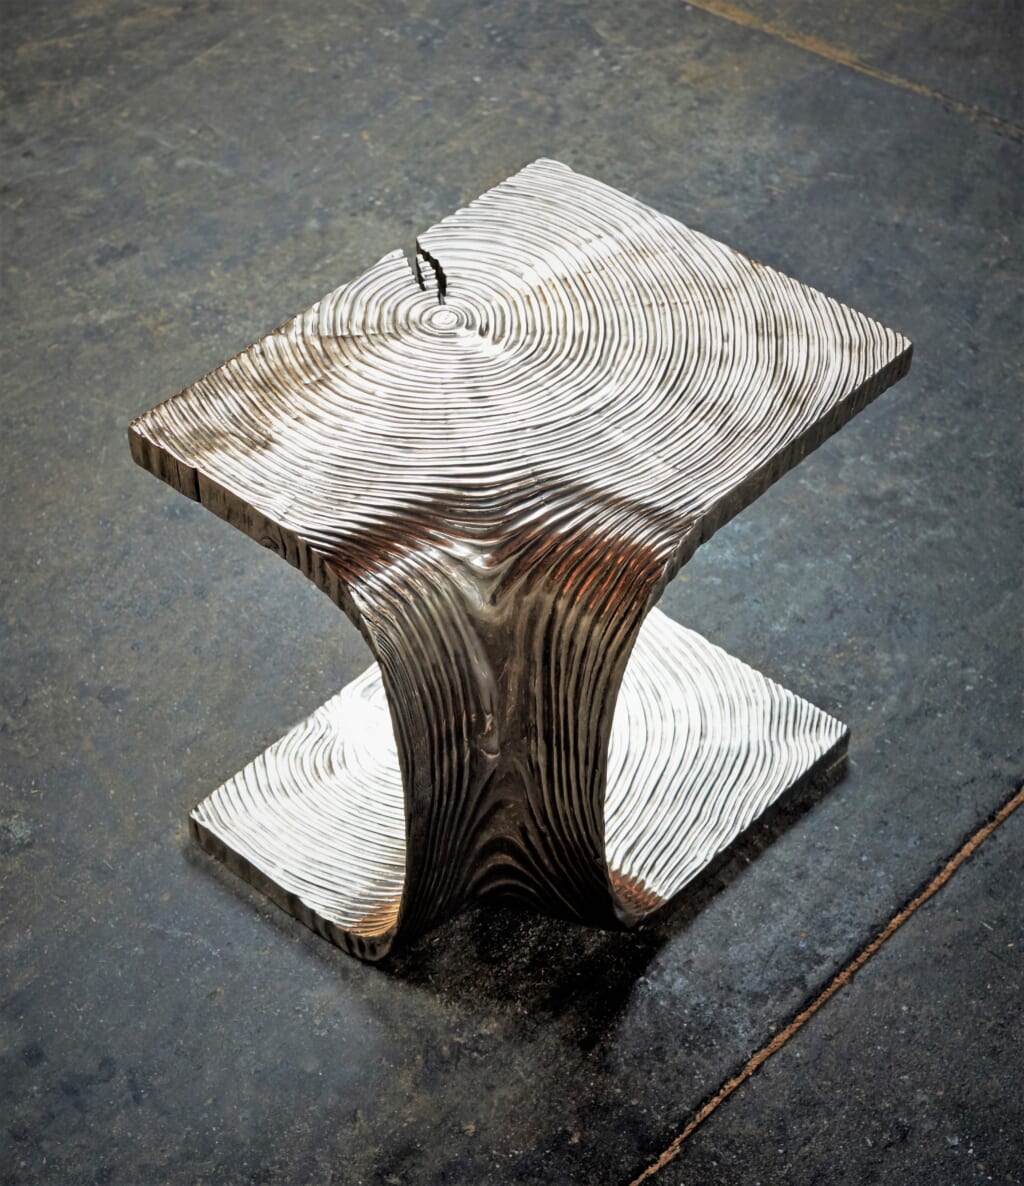 Stefan Bishop 1 Sculptor Stefan Bishop Turns Raw Materials Into Avant-Garde Furniture